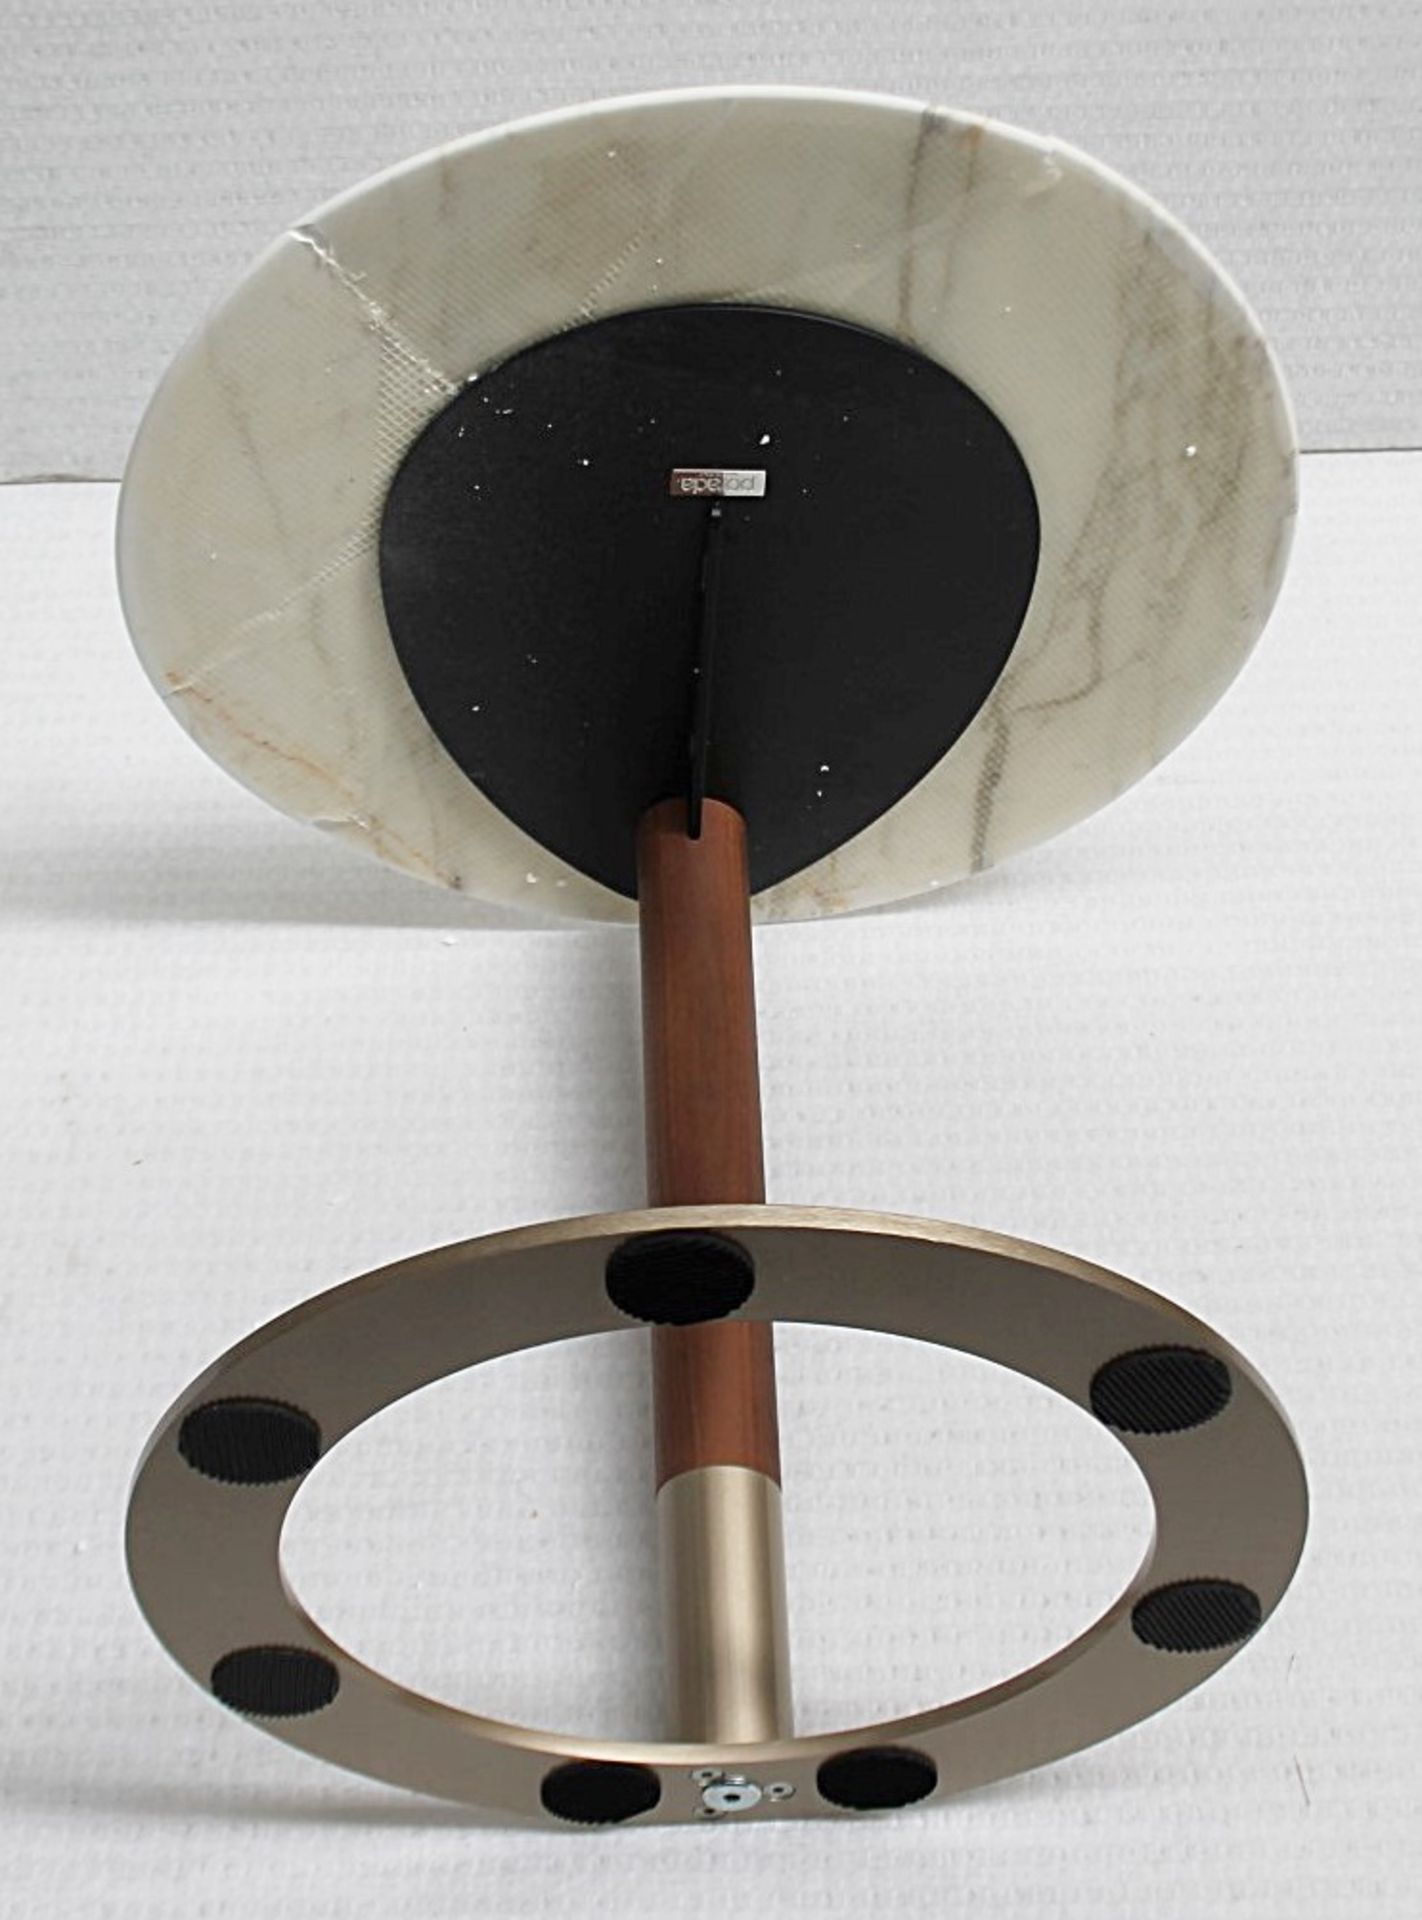 1 x POLTRONA FRAU 'JOK' Marble-Topped Round Luxury Designer Side Table - Original Price £1,285 - Image 2 of 8